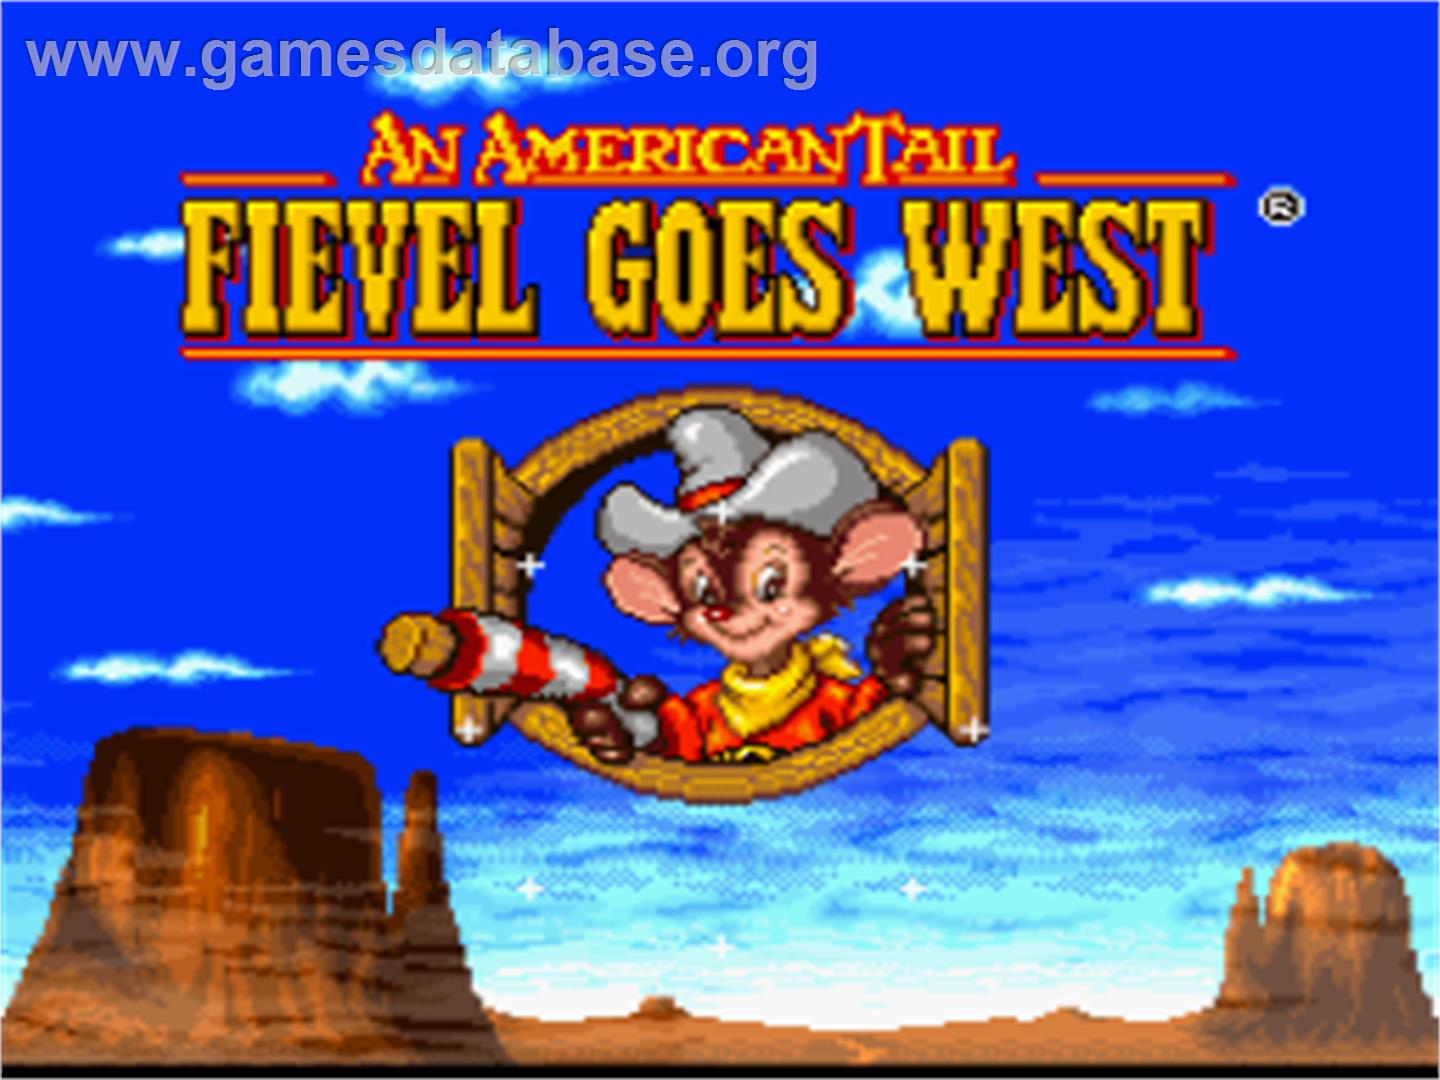 An American Tail: Fievel Goes West - Nintendo SNES - Artwork - Title Screen